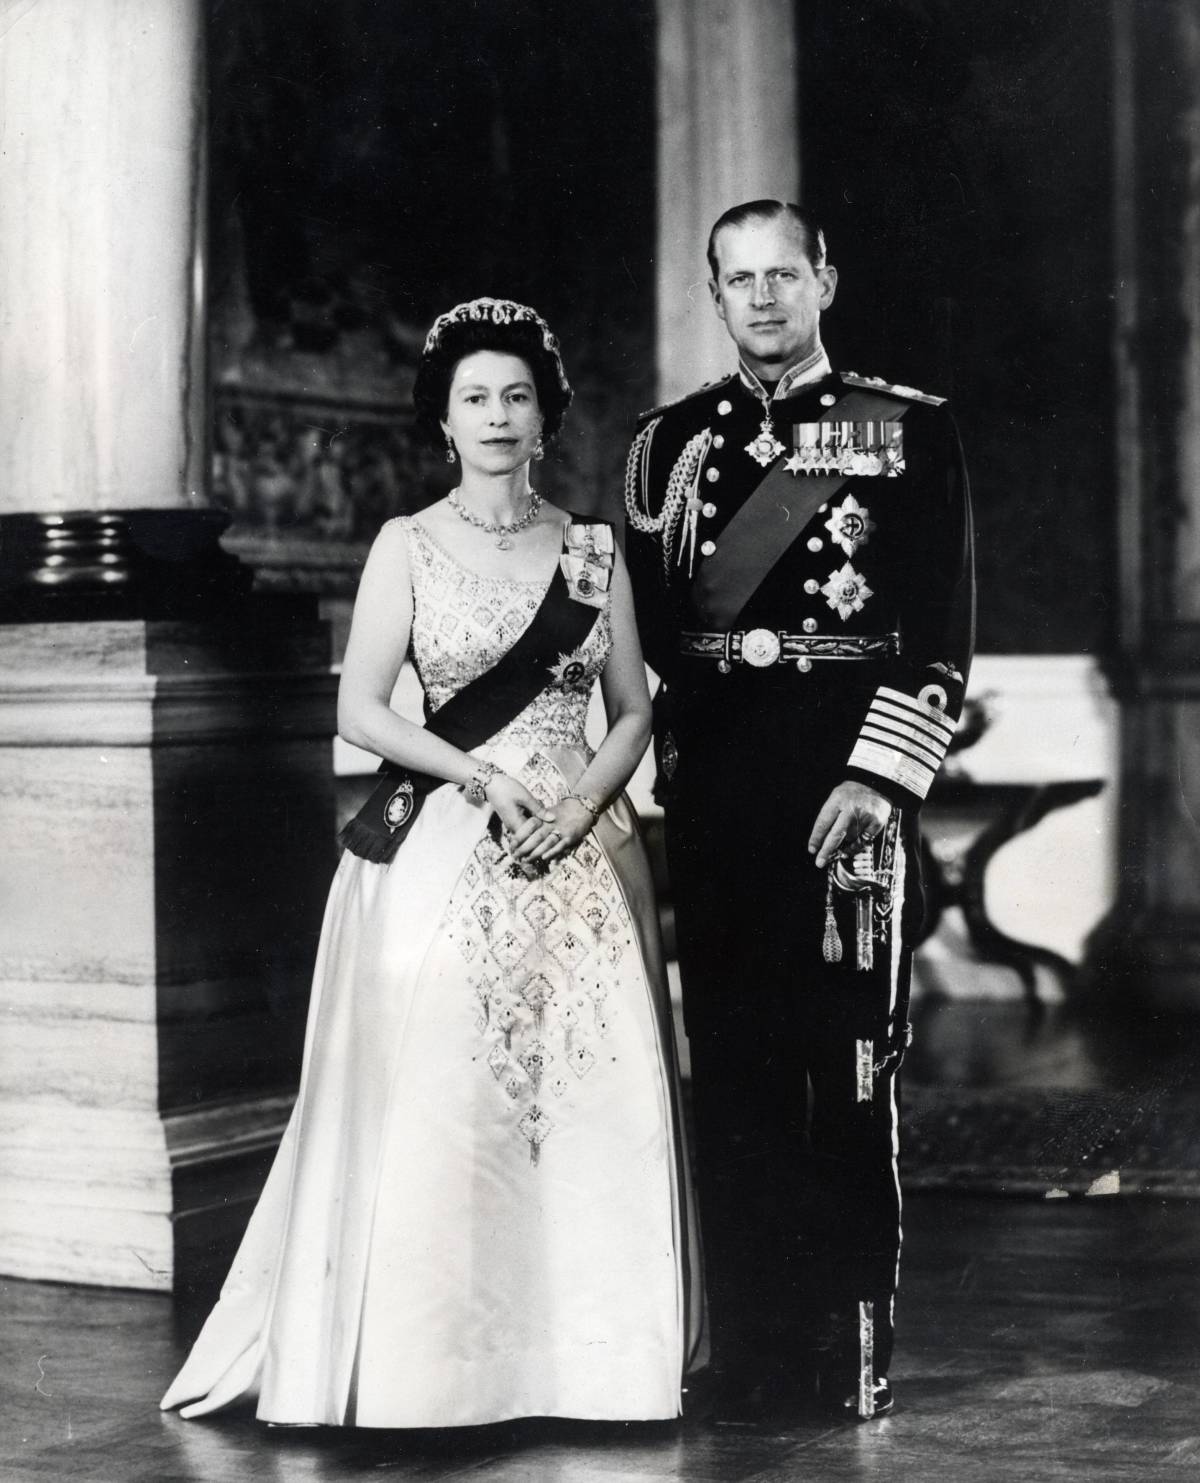 20220909-image-imago-mb-Princess Elizabeth and Prince Philip